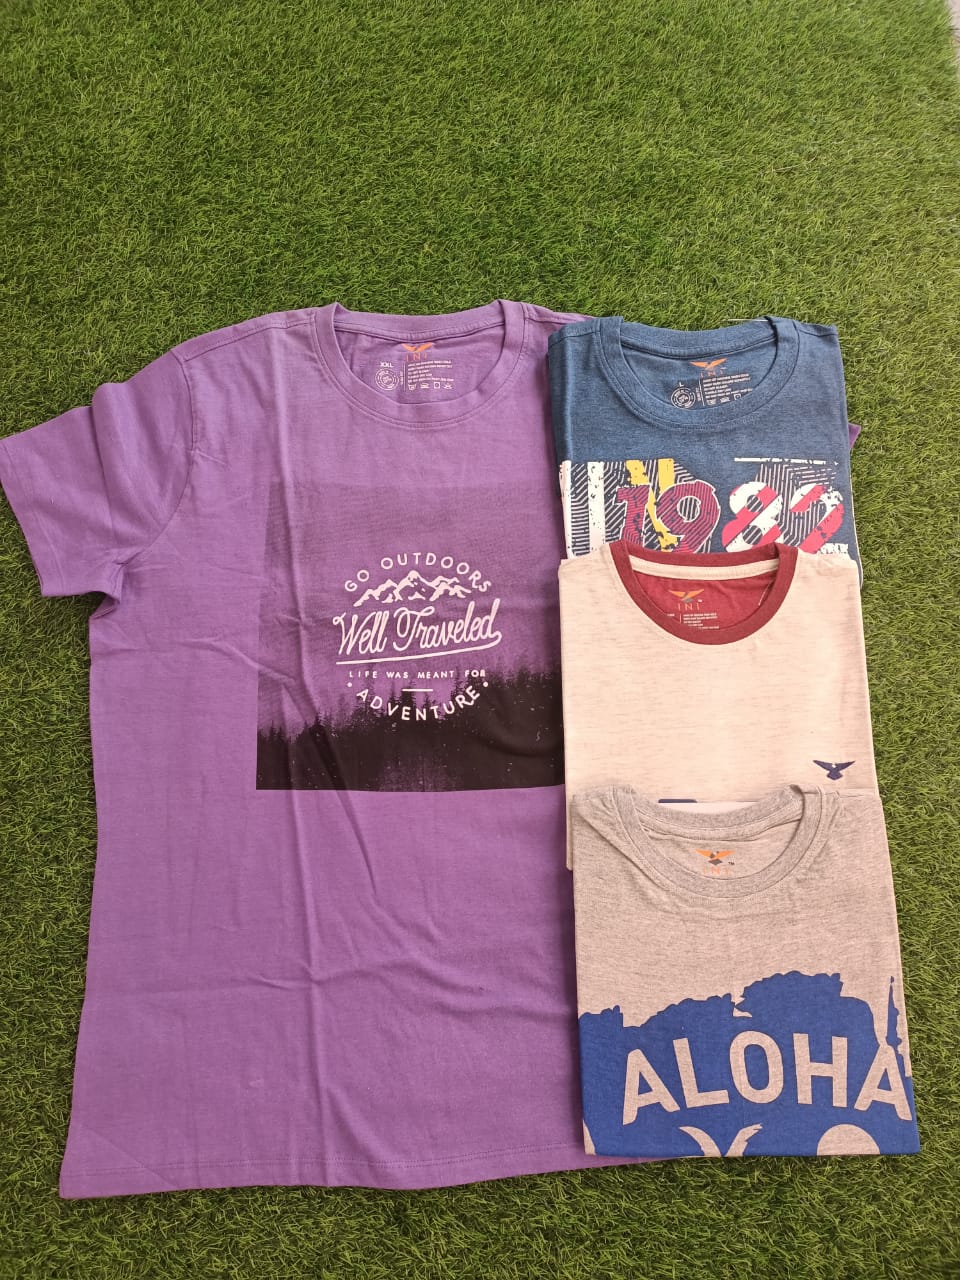 Ini Premium T-Shirts | Reapp.com.gh